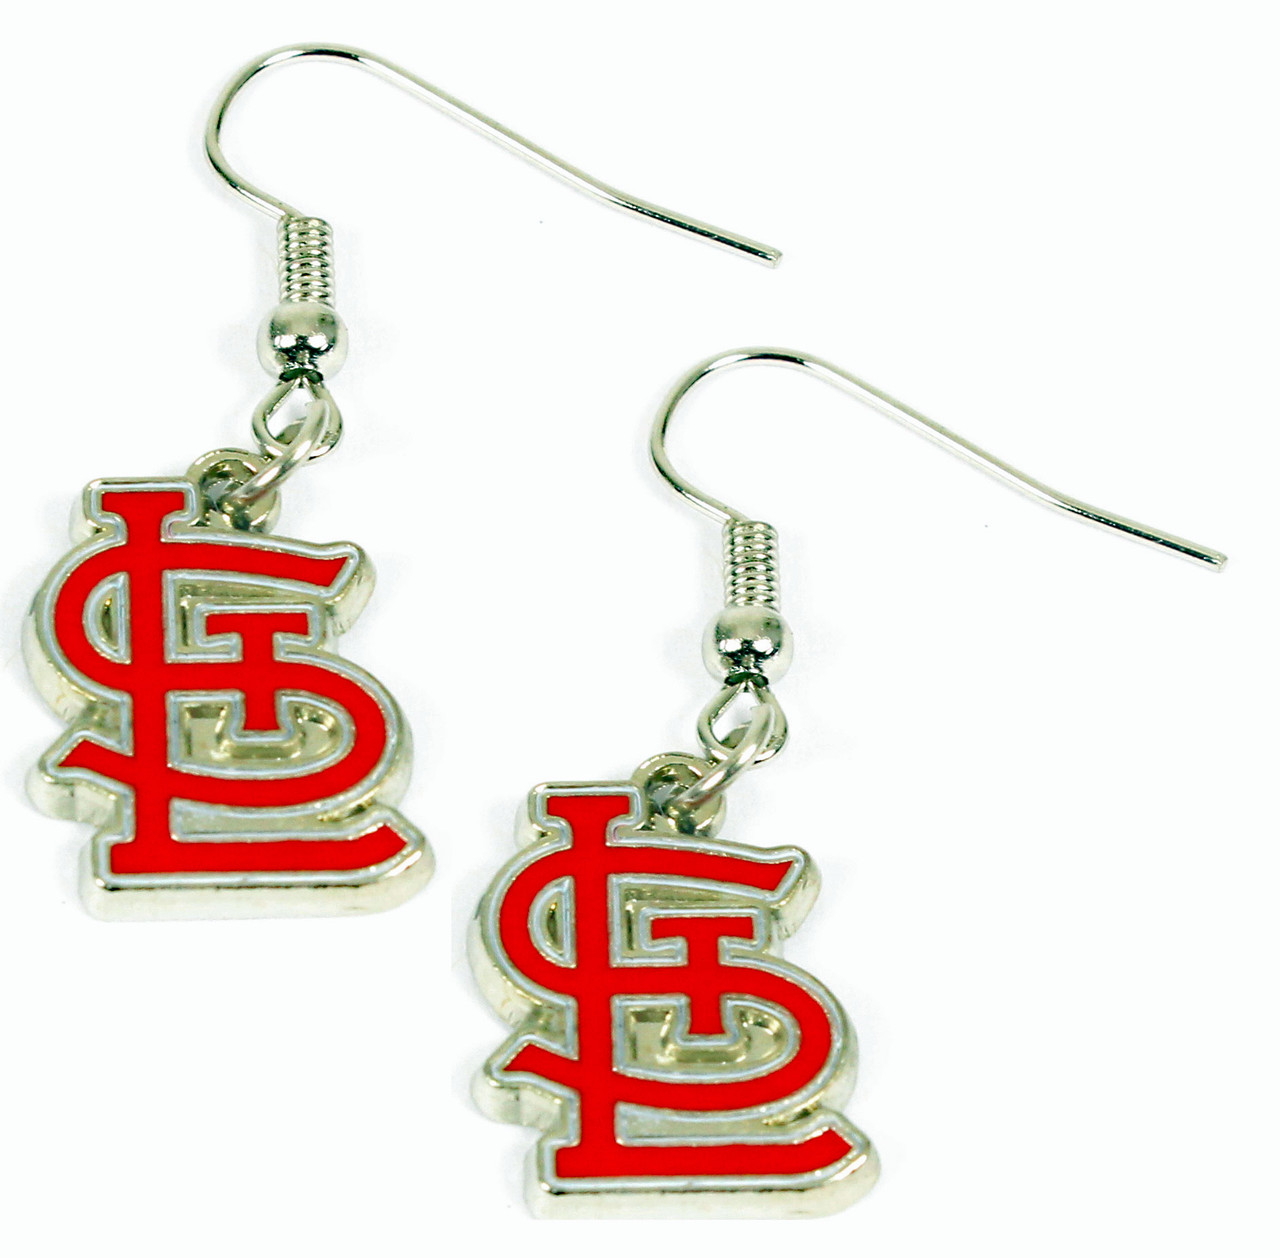 St. Louis Cardinals Logo Earrings